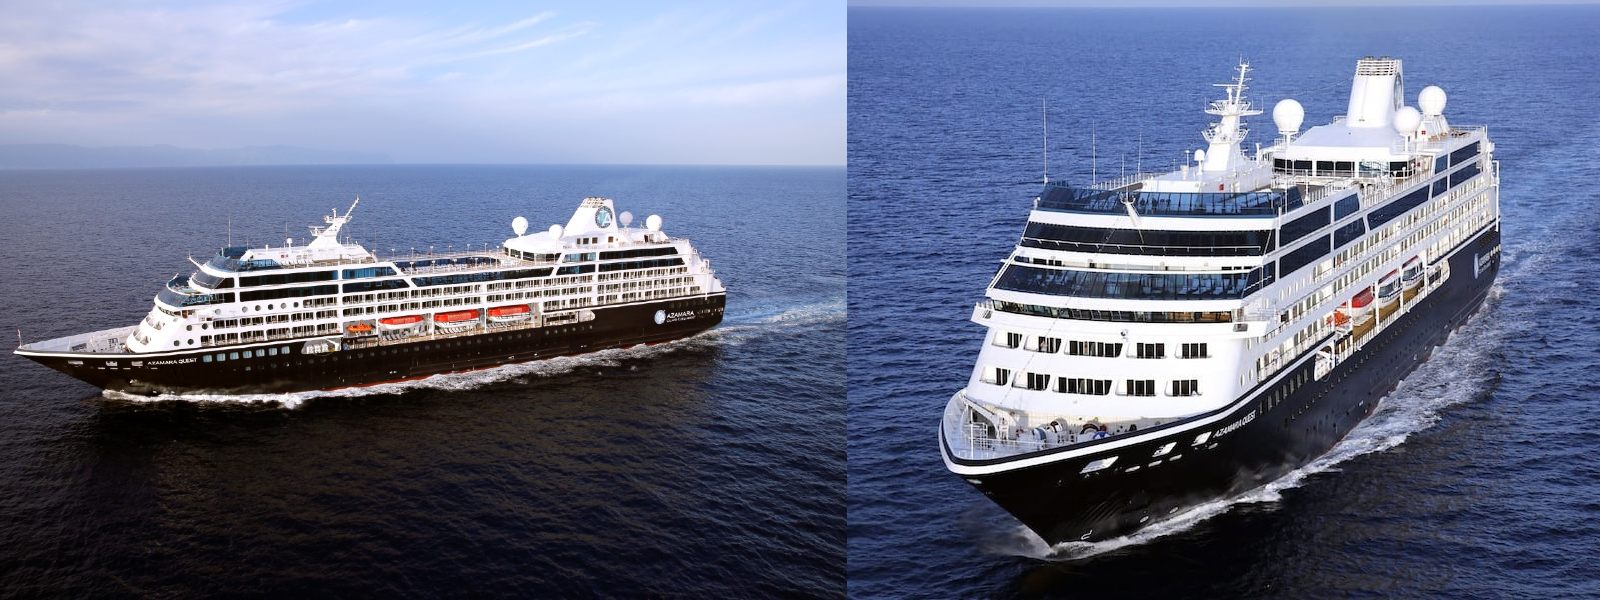 Second luxury cruise ship to reach SL next week